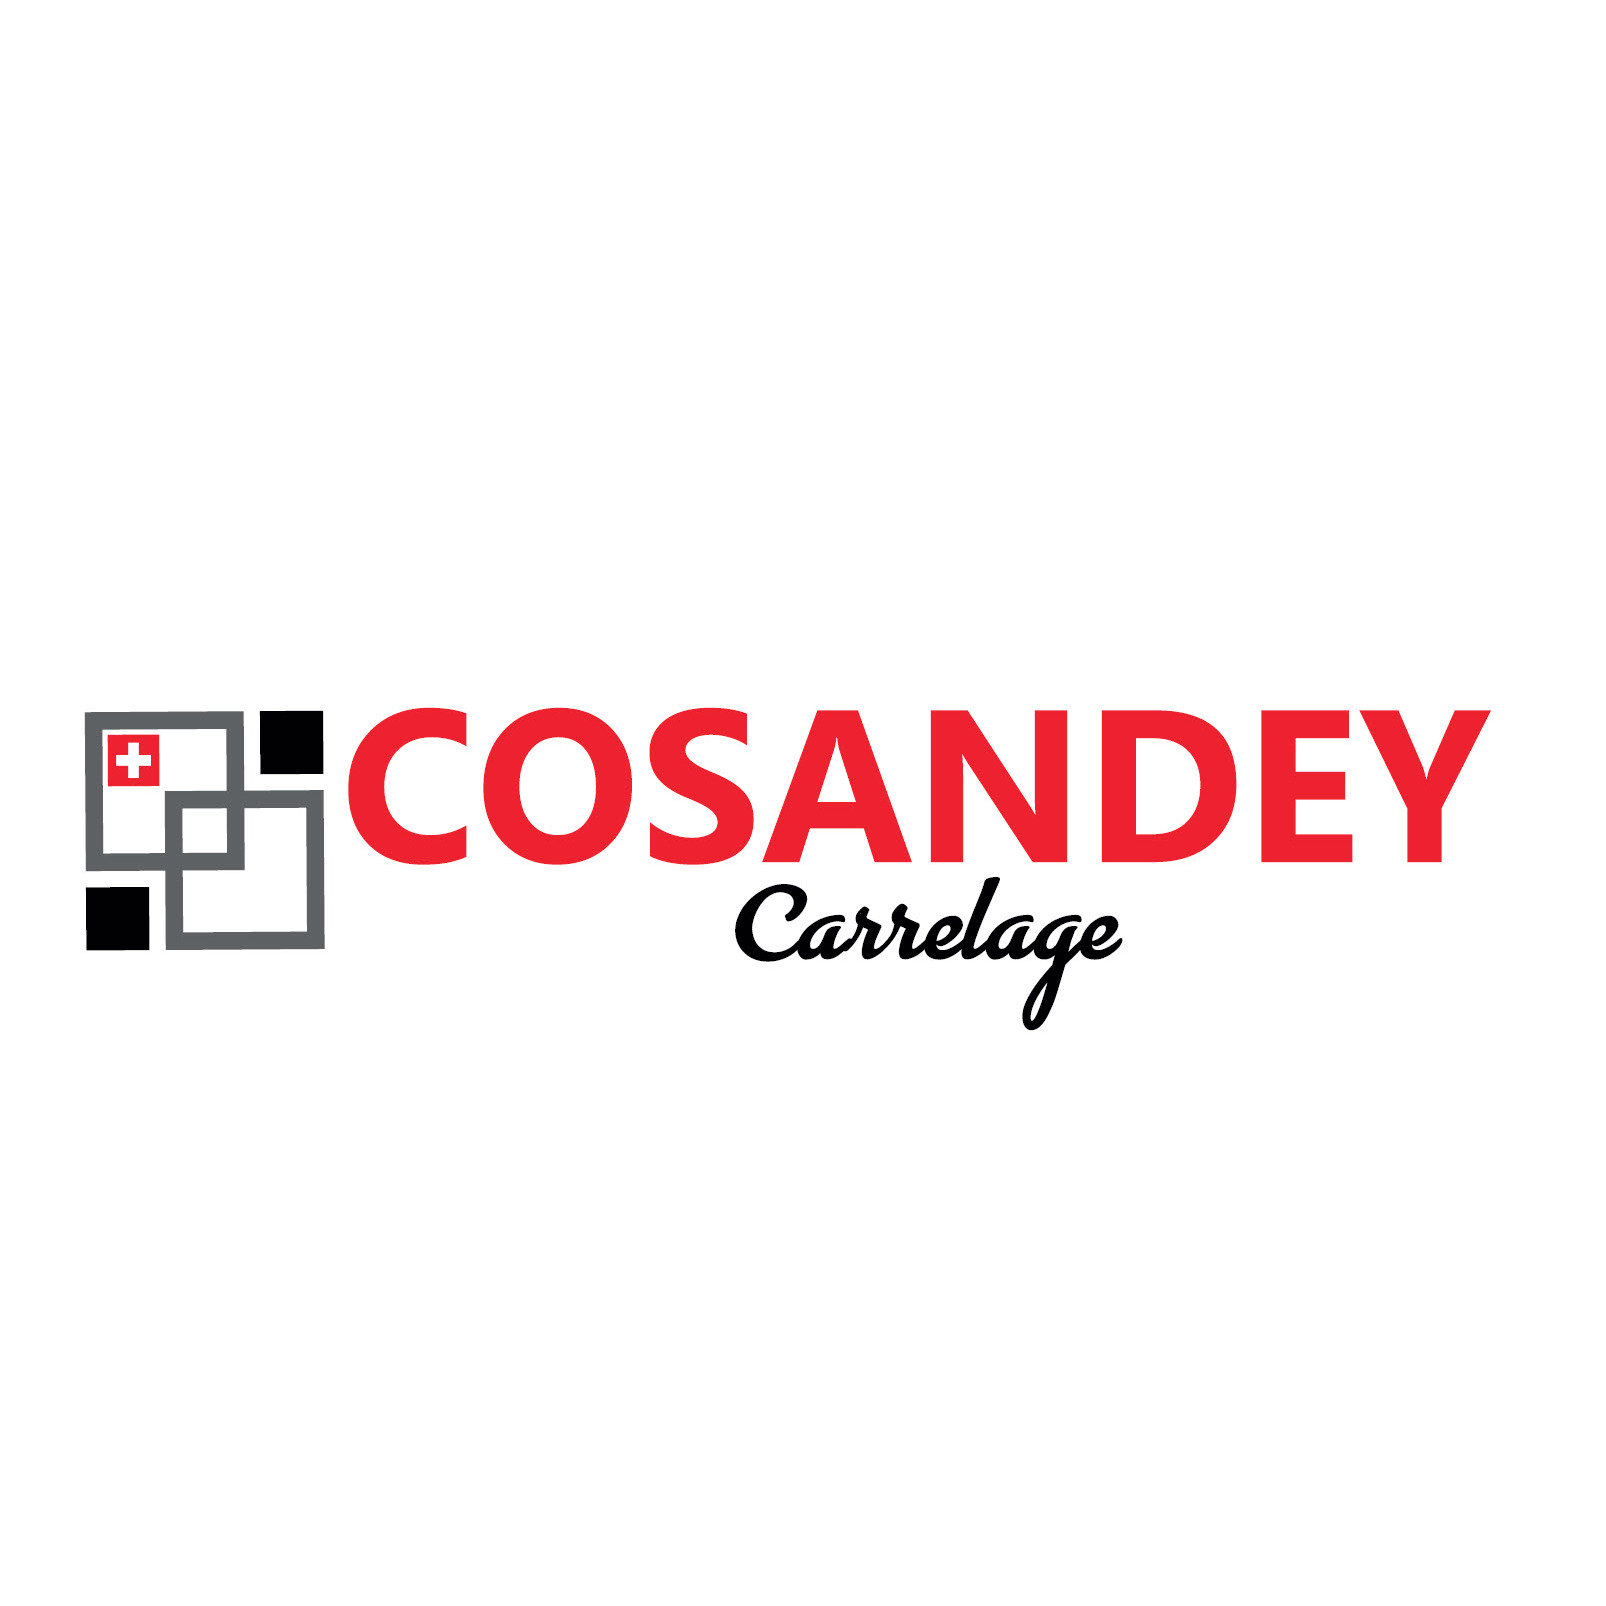 COSANDEY Carrelage Logo